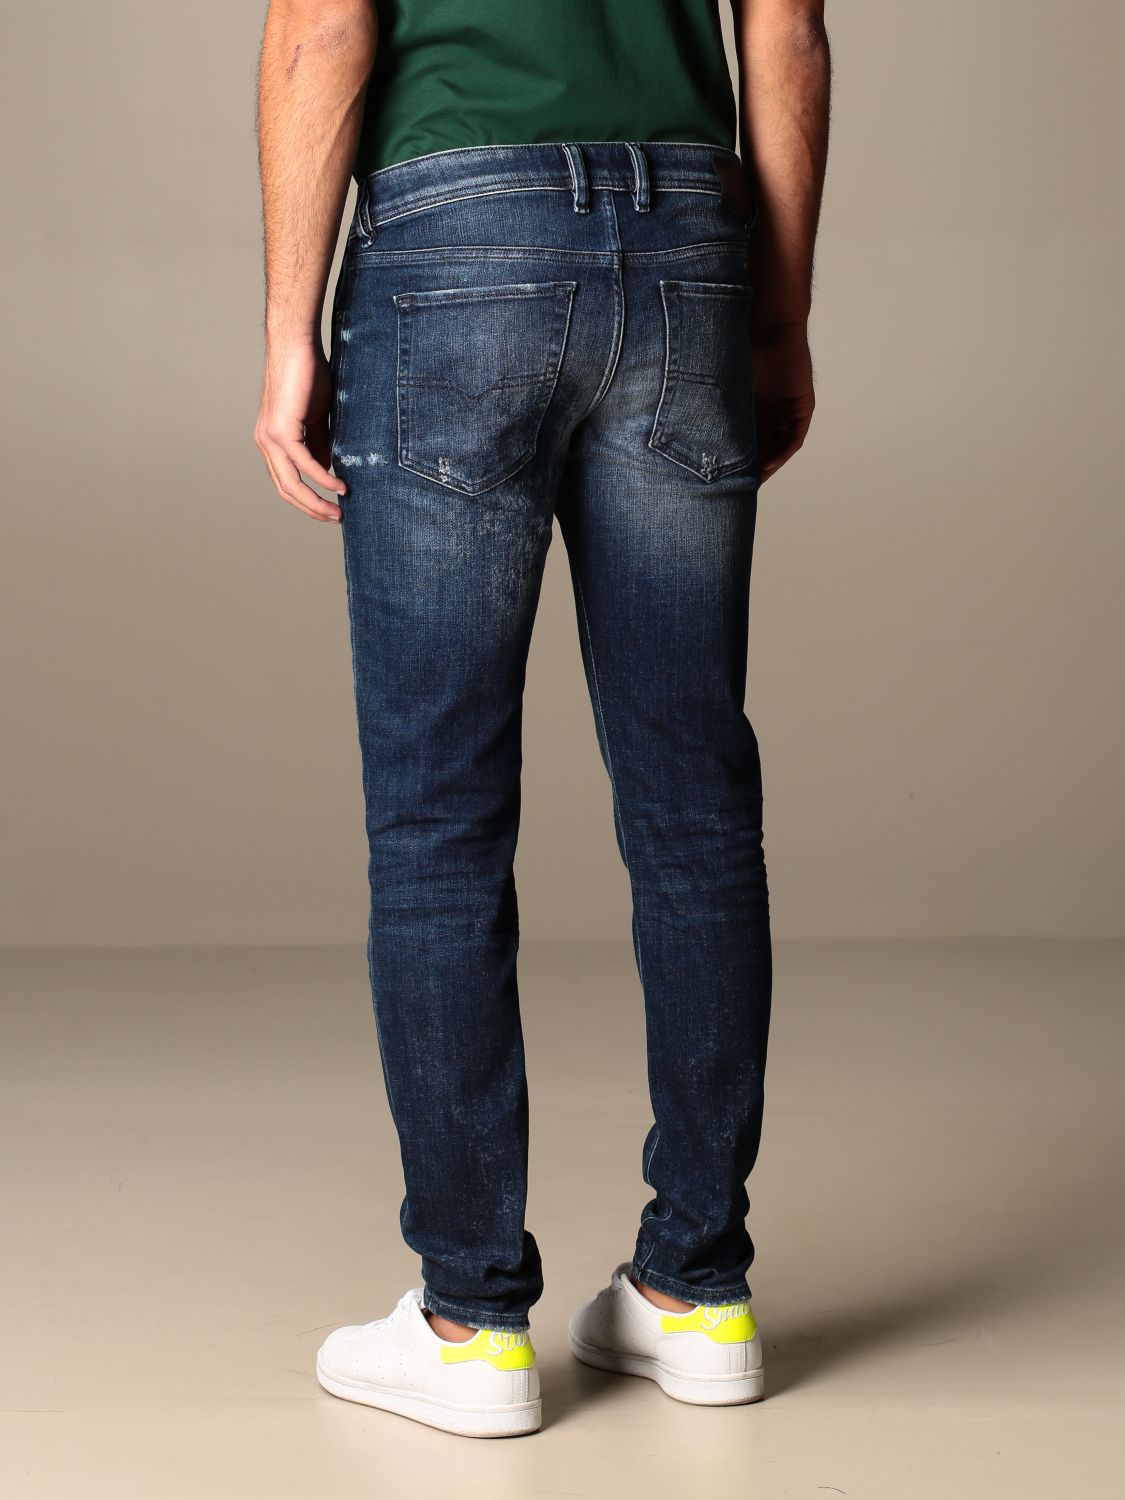 straf toevoegen koppeling DIESEL: jeans in used denim with tears - Denim | Diesel jeans 00SWJE 009JM  online on GIGLIO.COM